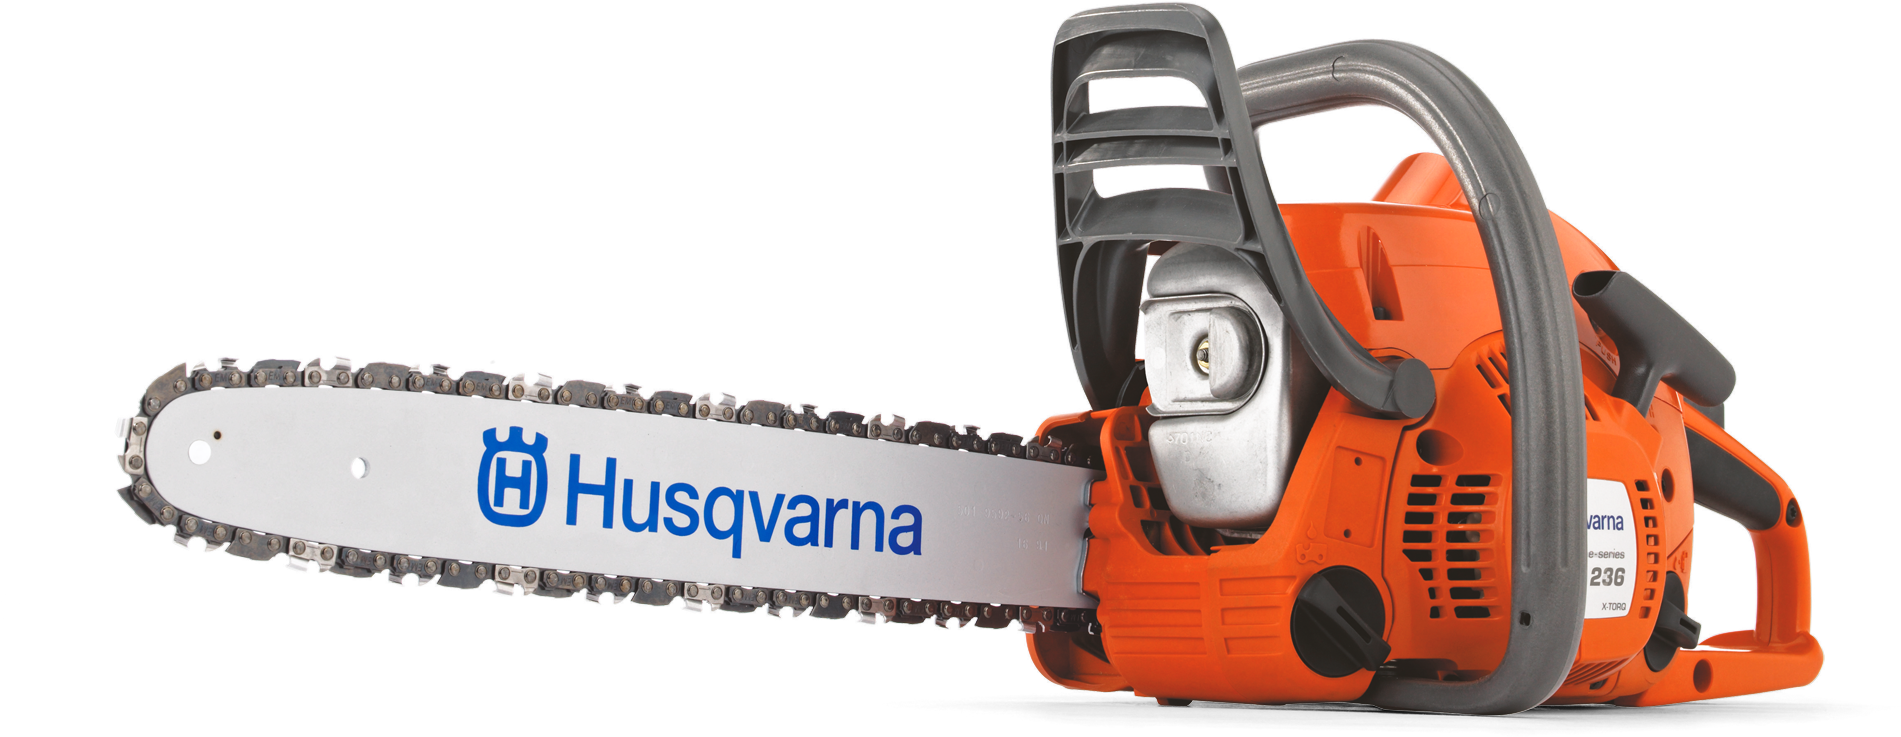 Husqvarna Chainsaw Model PNG